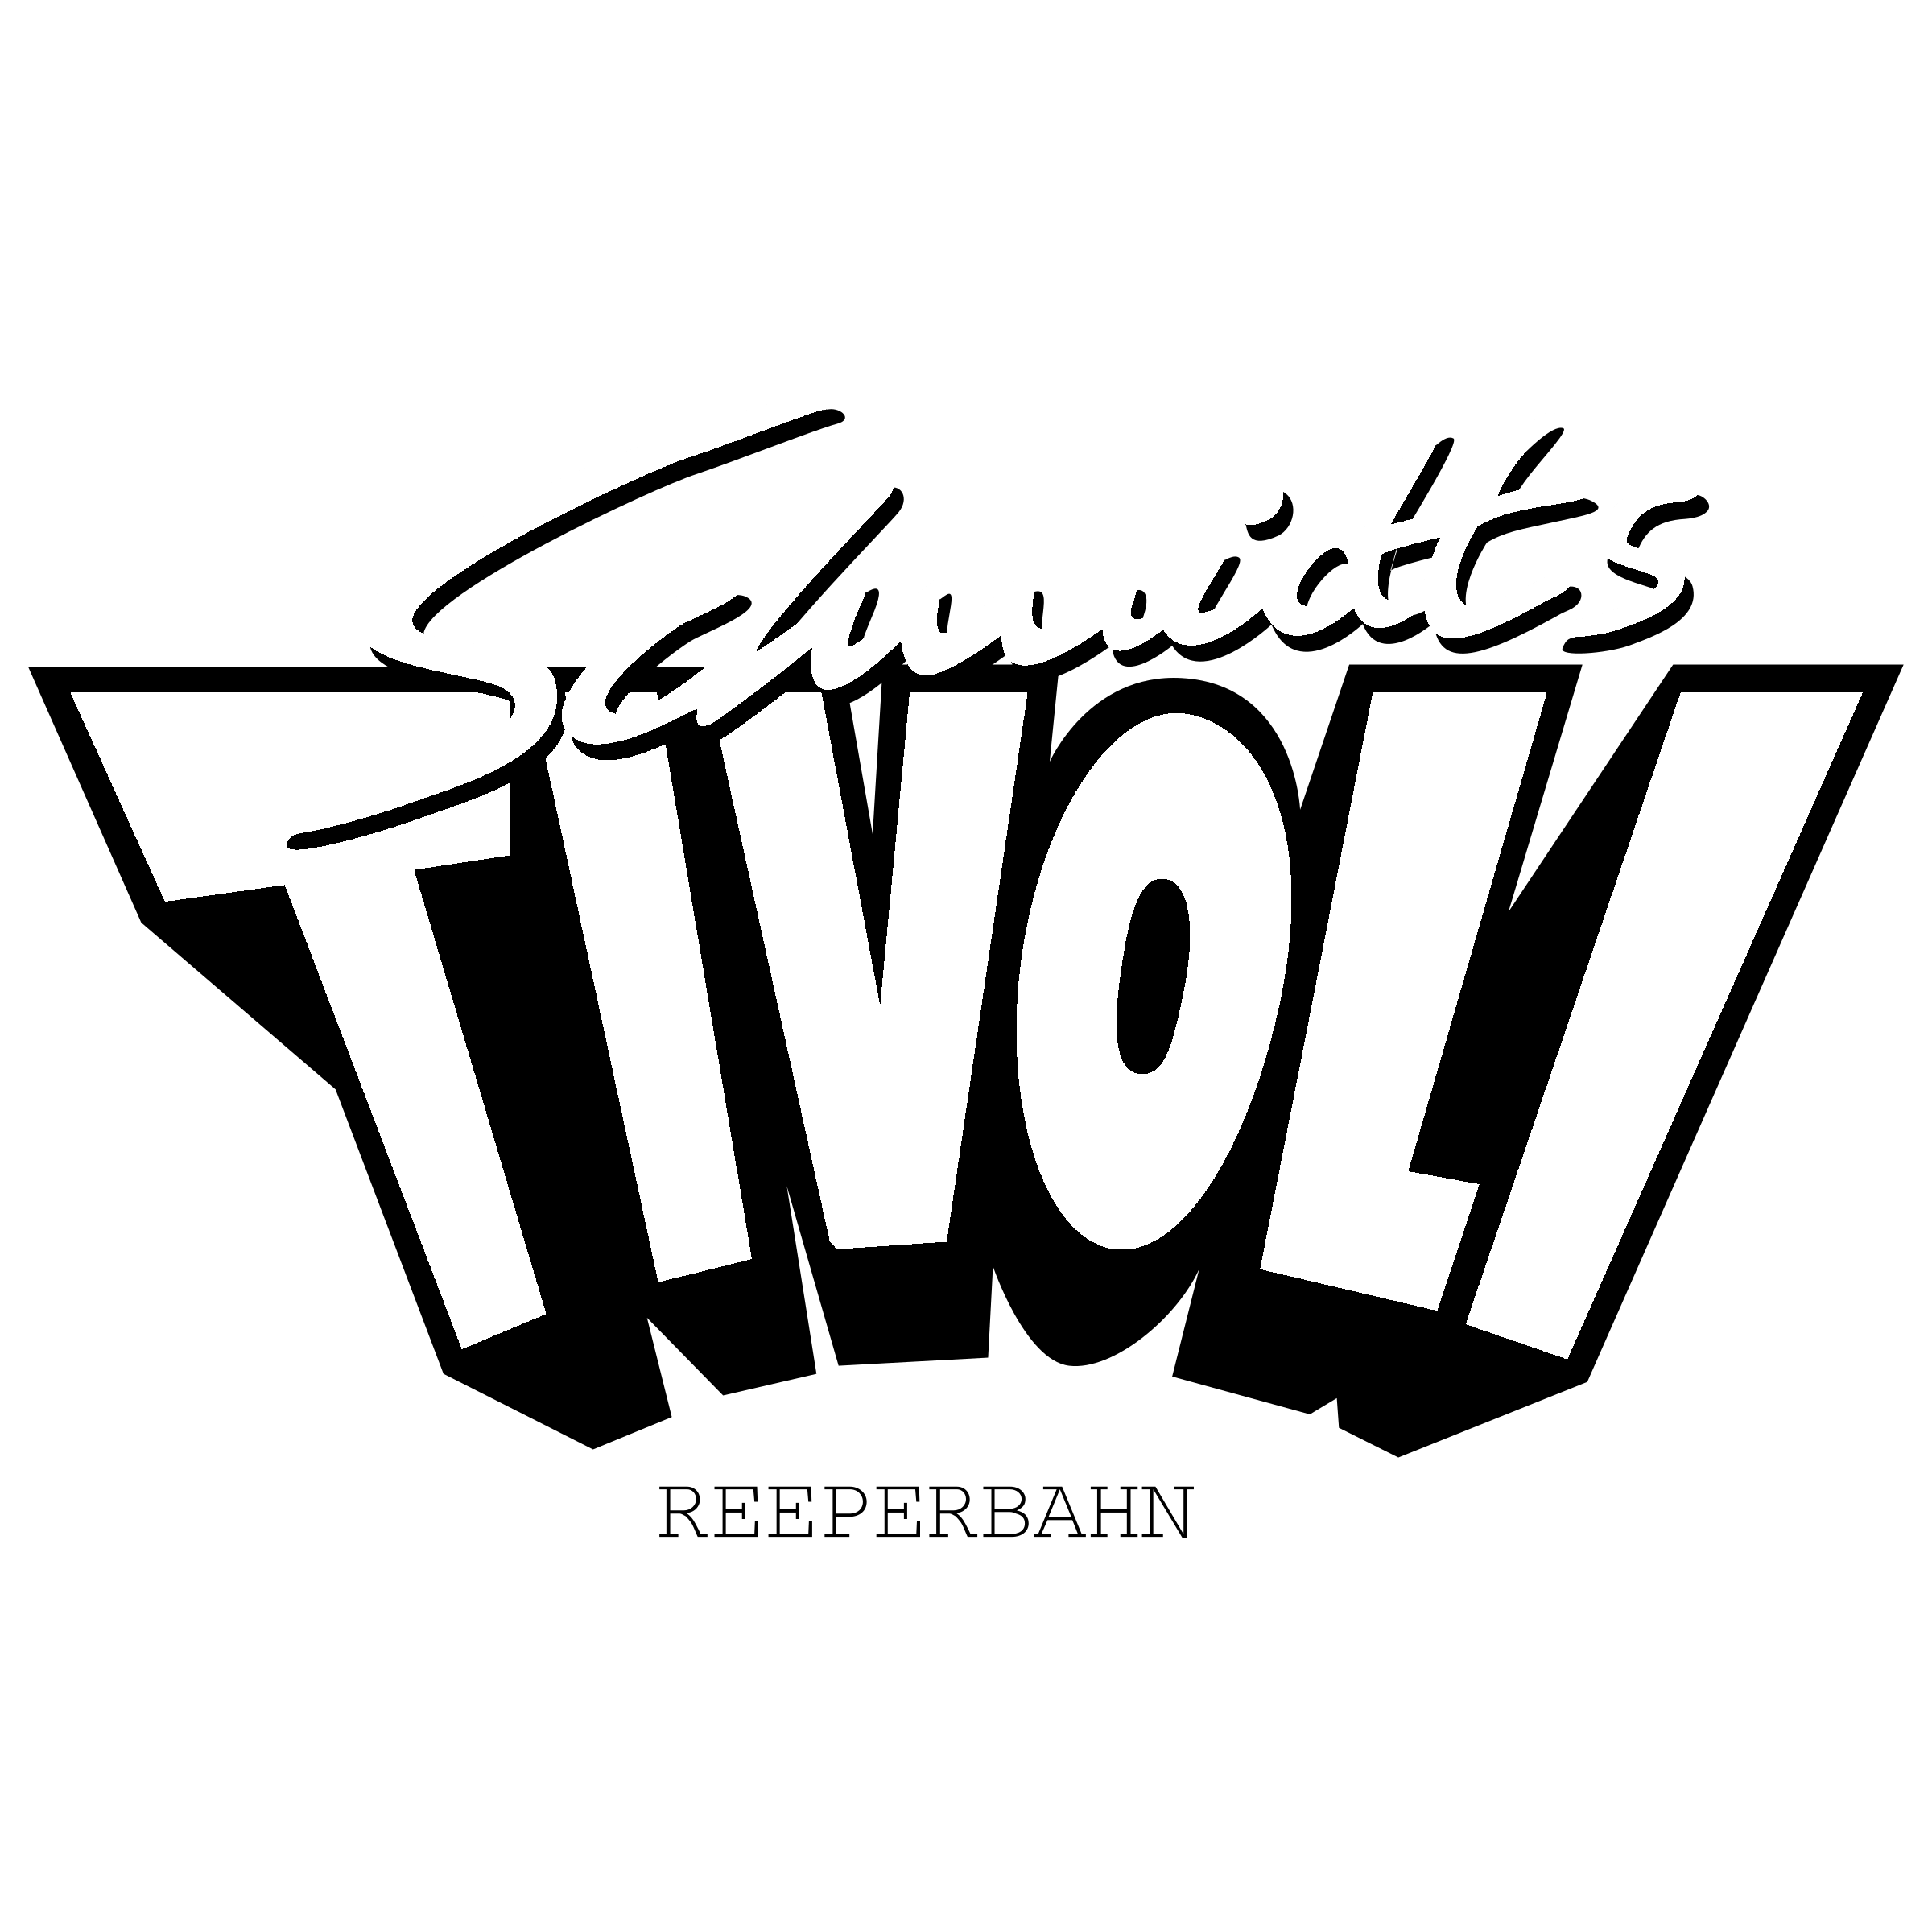 Tivoli Logo - Tivoli Logo PNG Transparent & SVG Vector - Freebie Supply